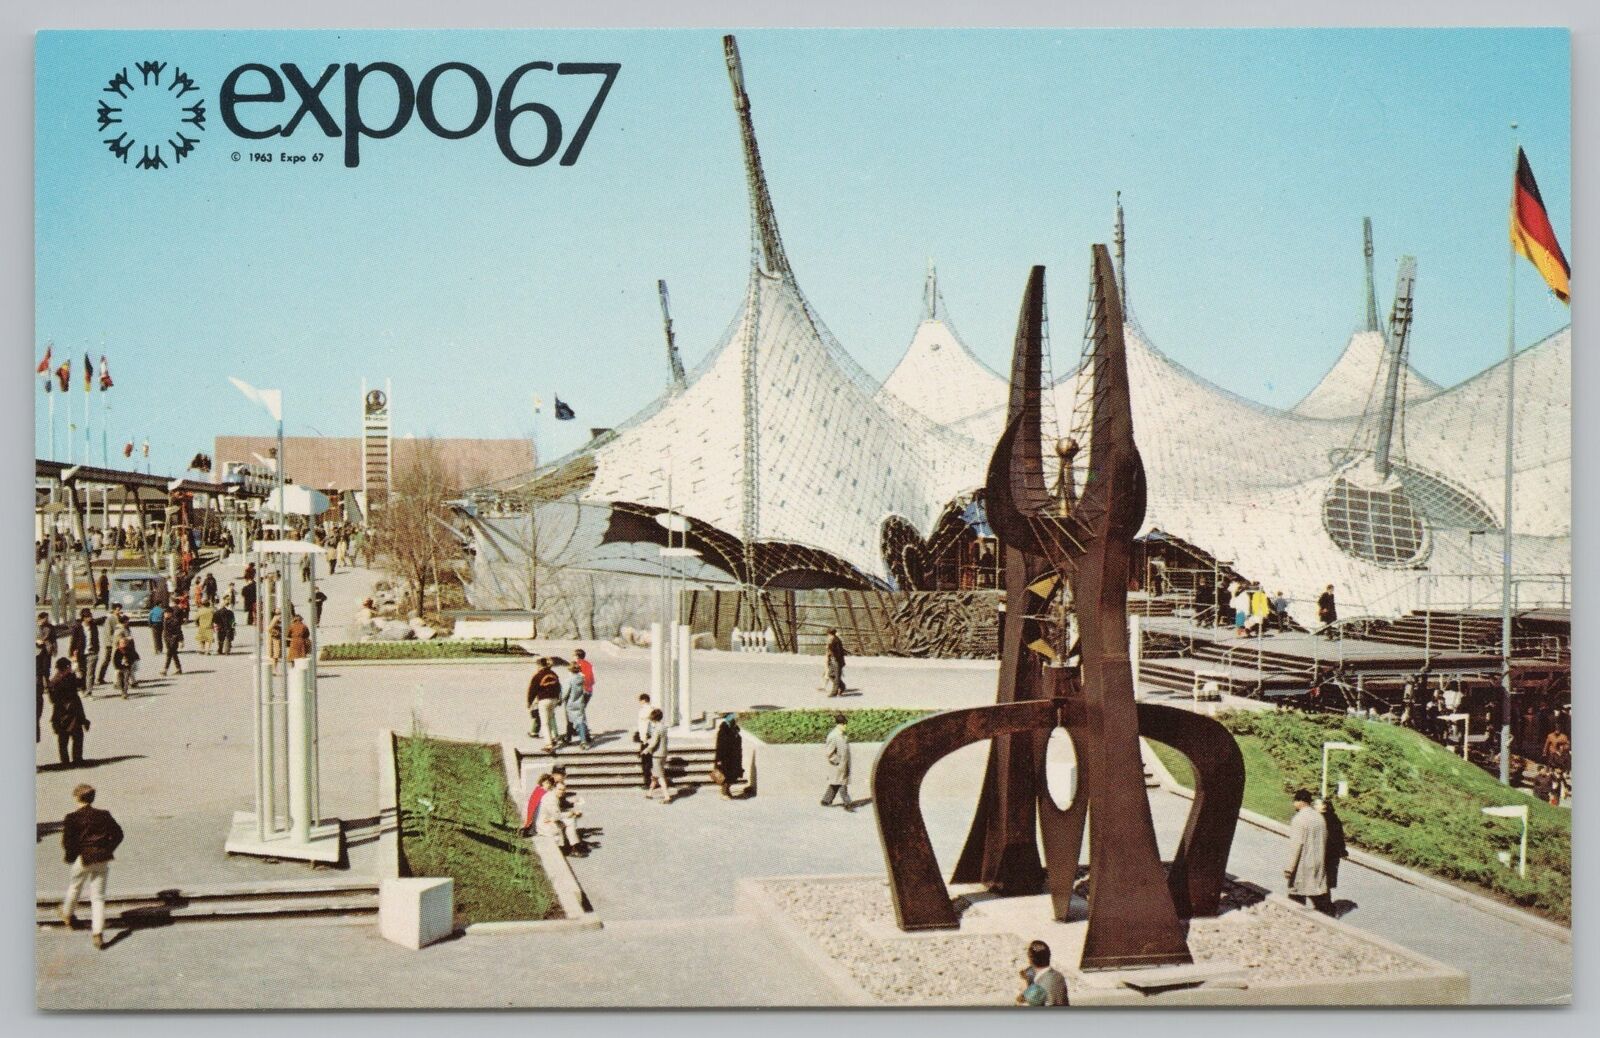 Theme Park & Expo~Federal Republic Germany Pavilion Expo 67~Vintage Postcard